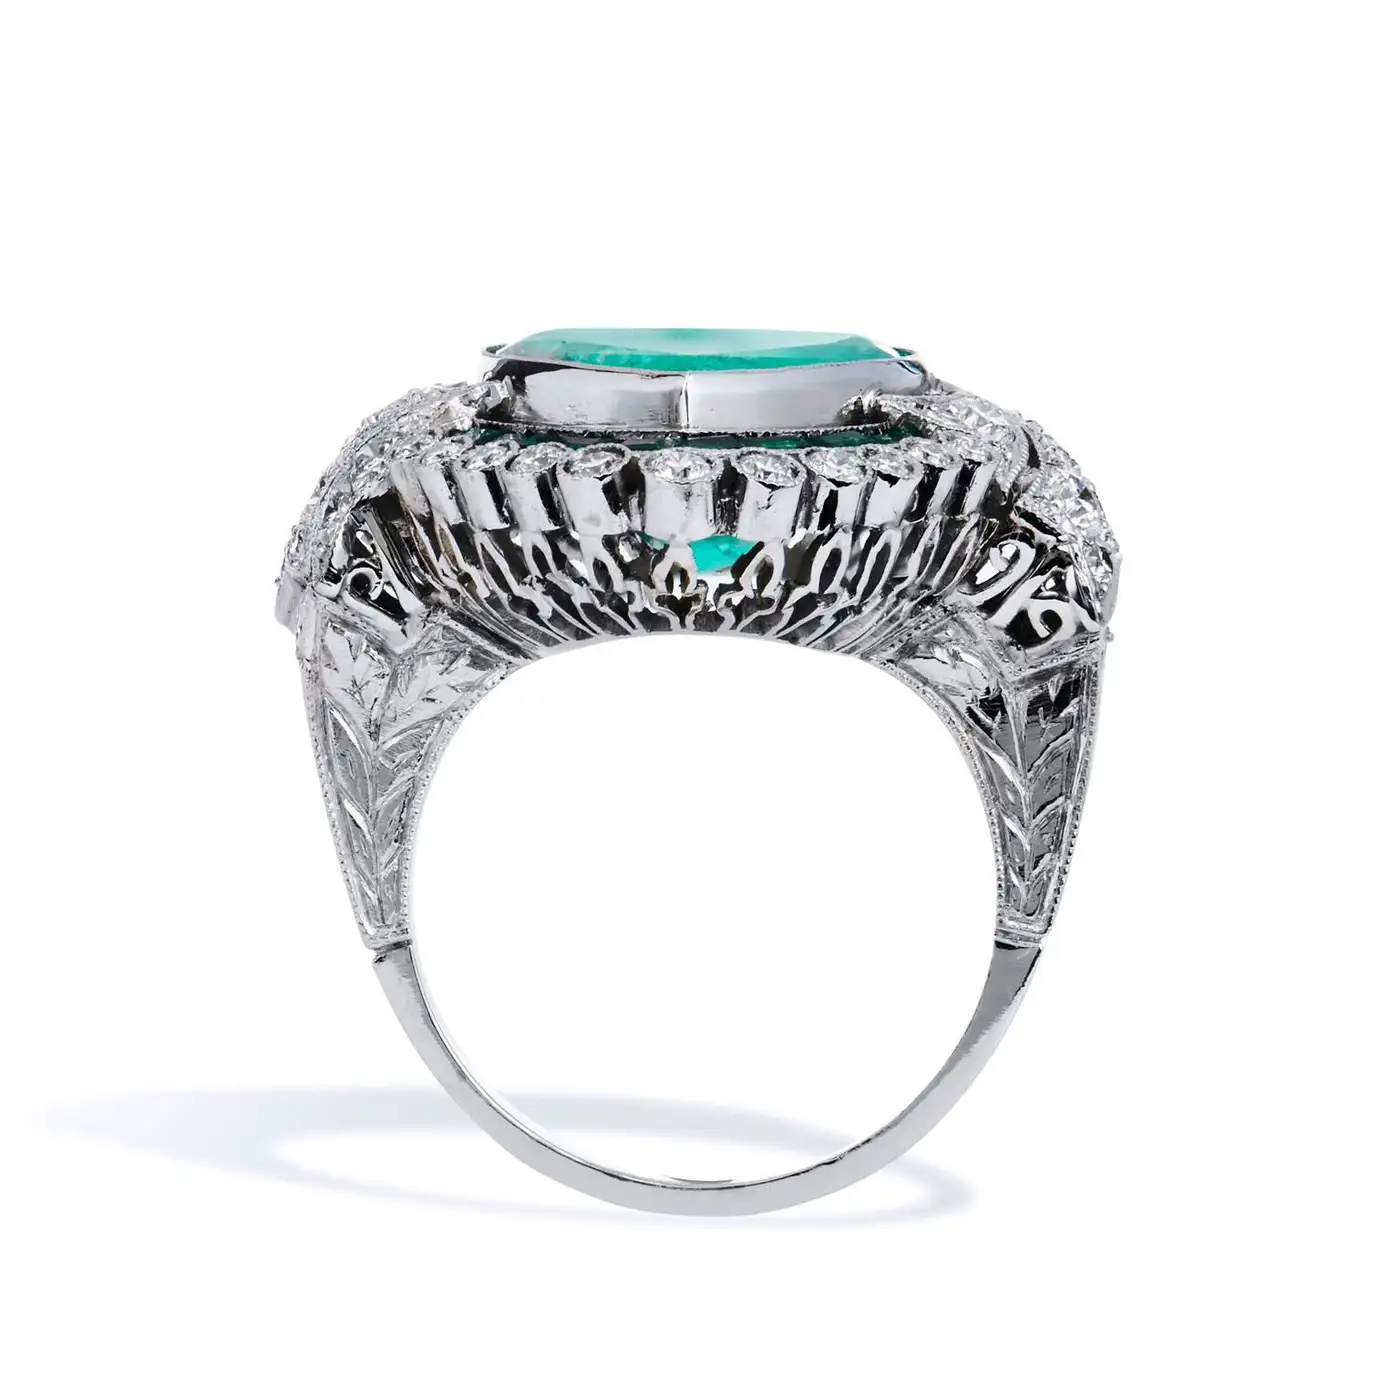 Art-Deco-Inspired-5.87-Carat-Heart-Shaped-Colombian-Emerald-Diamond-Plat-Ring-7-3.webp